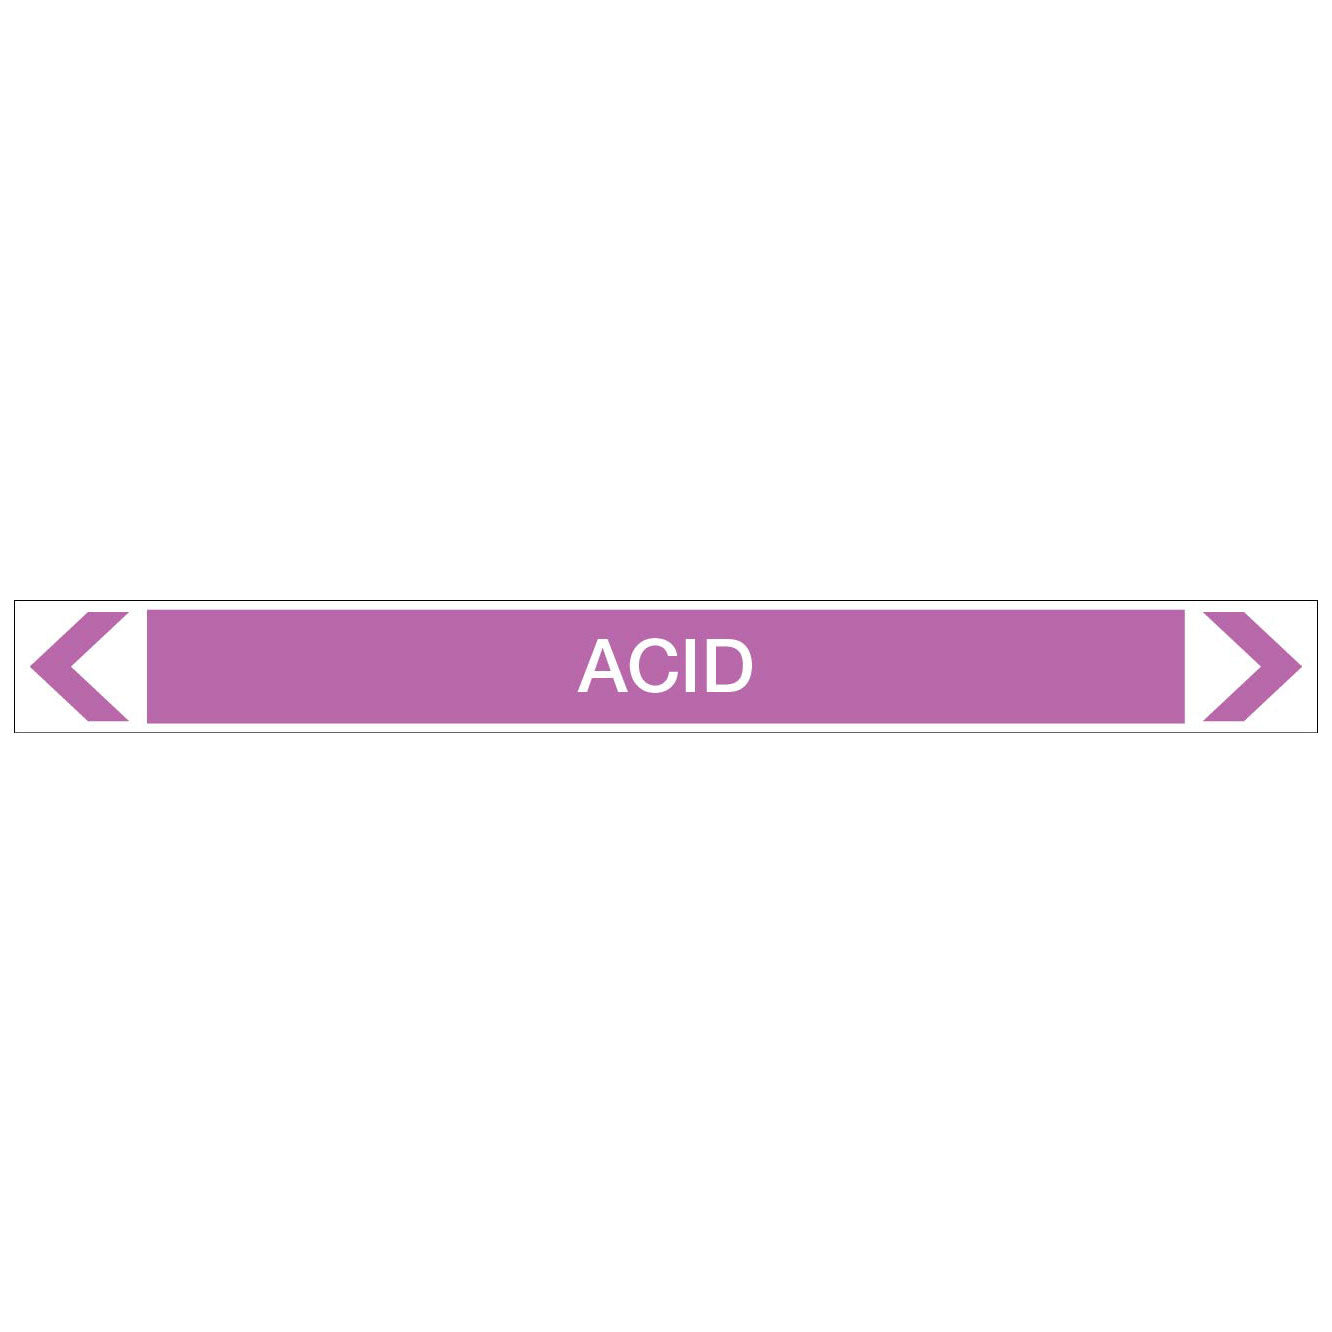 Alkalis / Acids - Acid - Pipe Marker Sticker